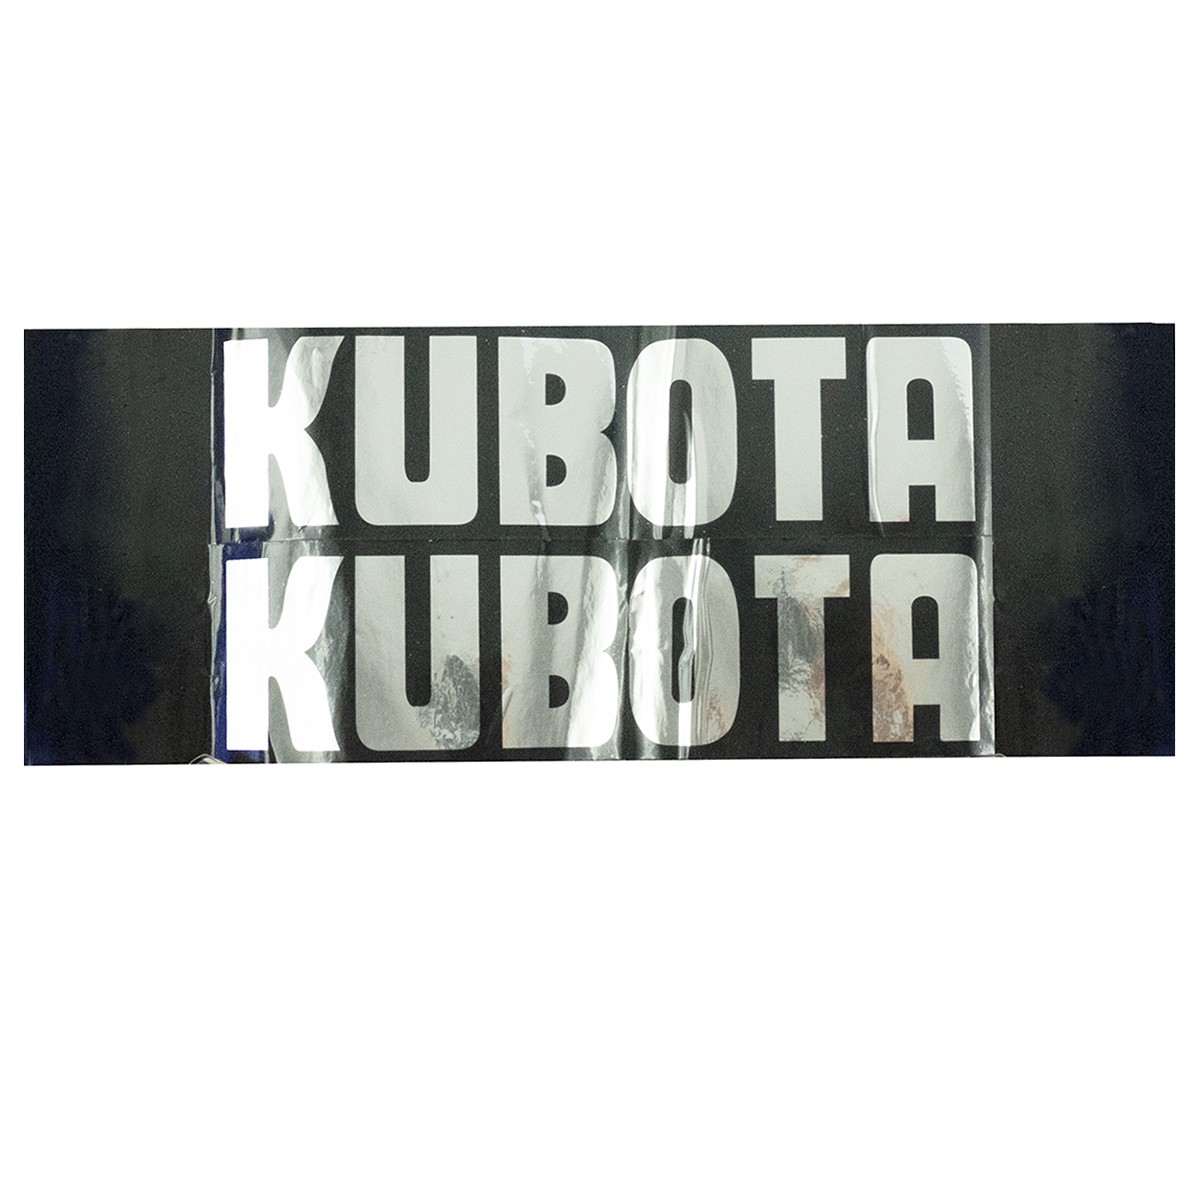 Nálepky Kubota B, Kubota B5000, B5001, B6000, B6001, B7000, B7001